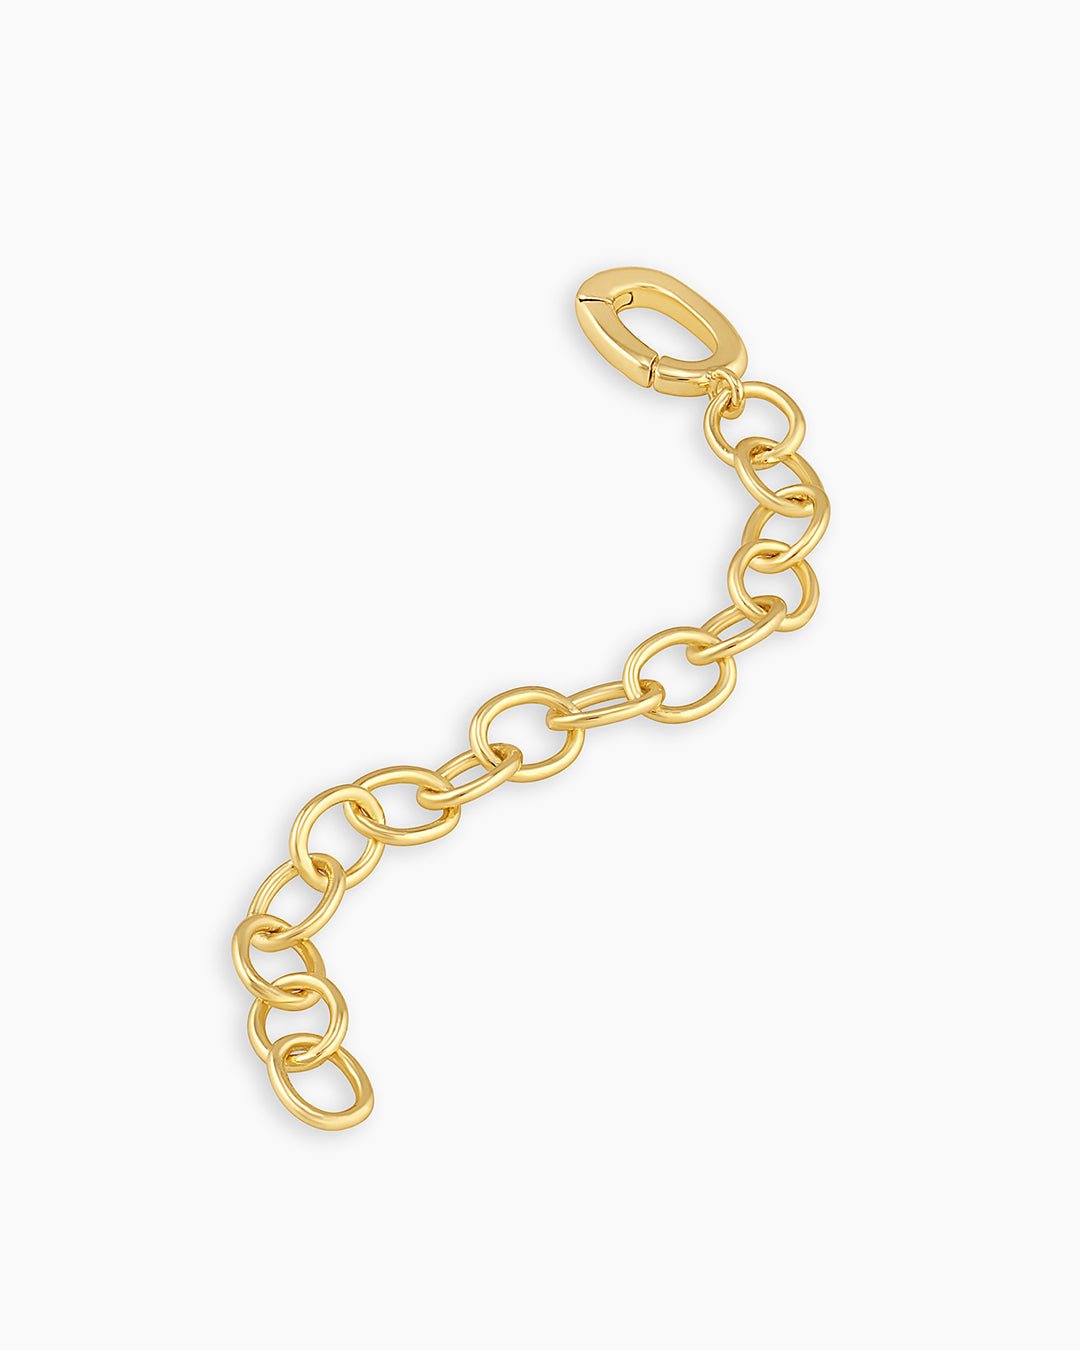  2 link necklace extender || option::Gold Plated